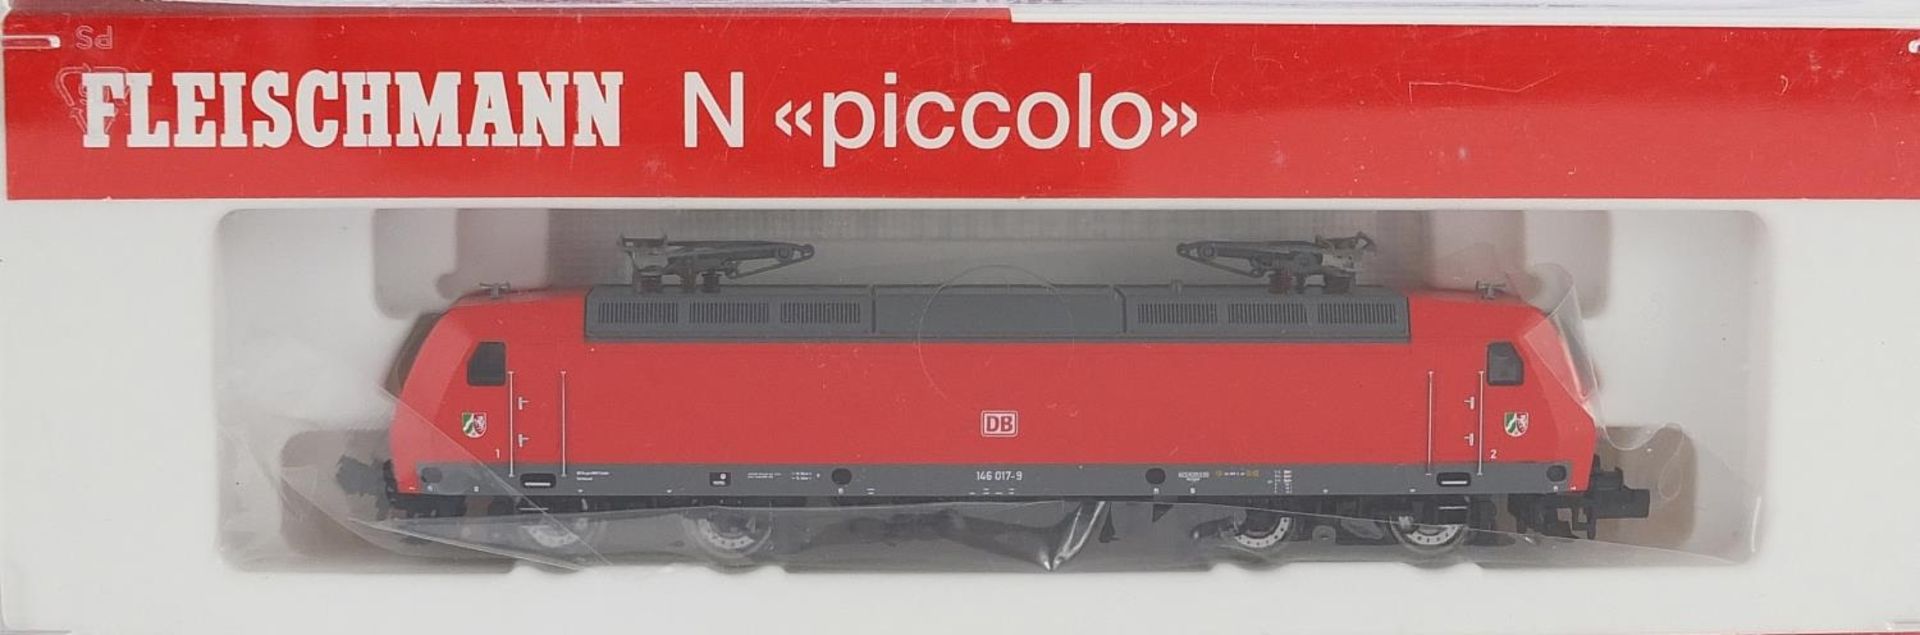 Three Fleischmann N gauge model railway locomotives with cases, numbers 7324, 7385 and 731304 - Image 4 of 4